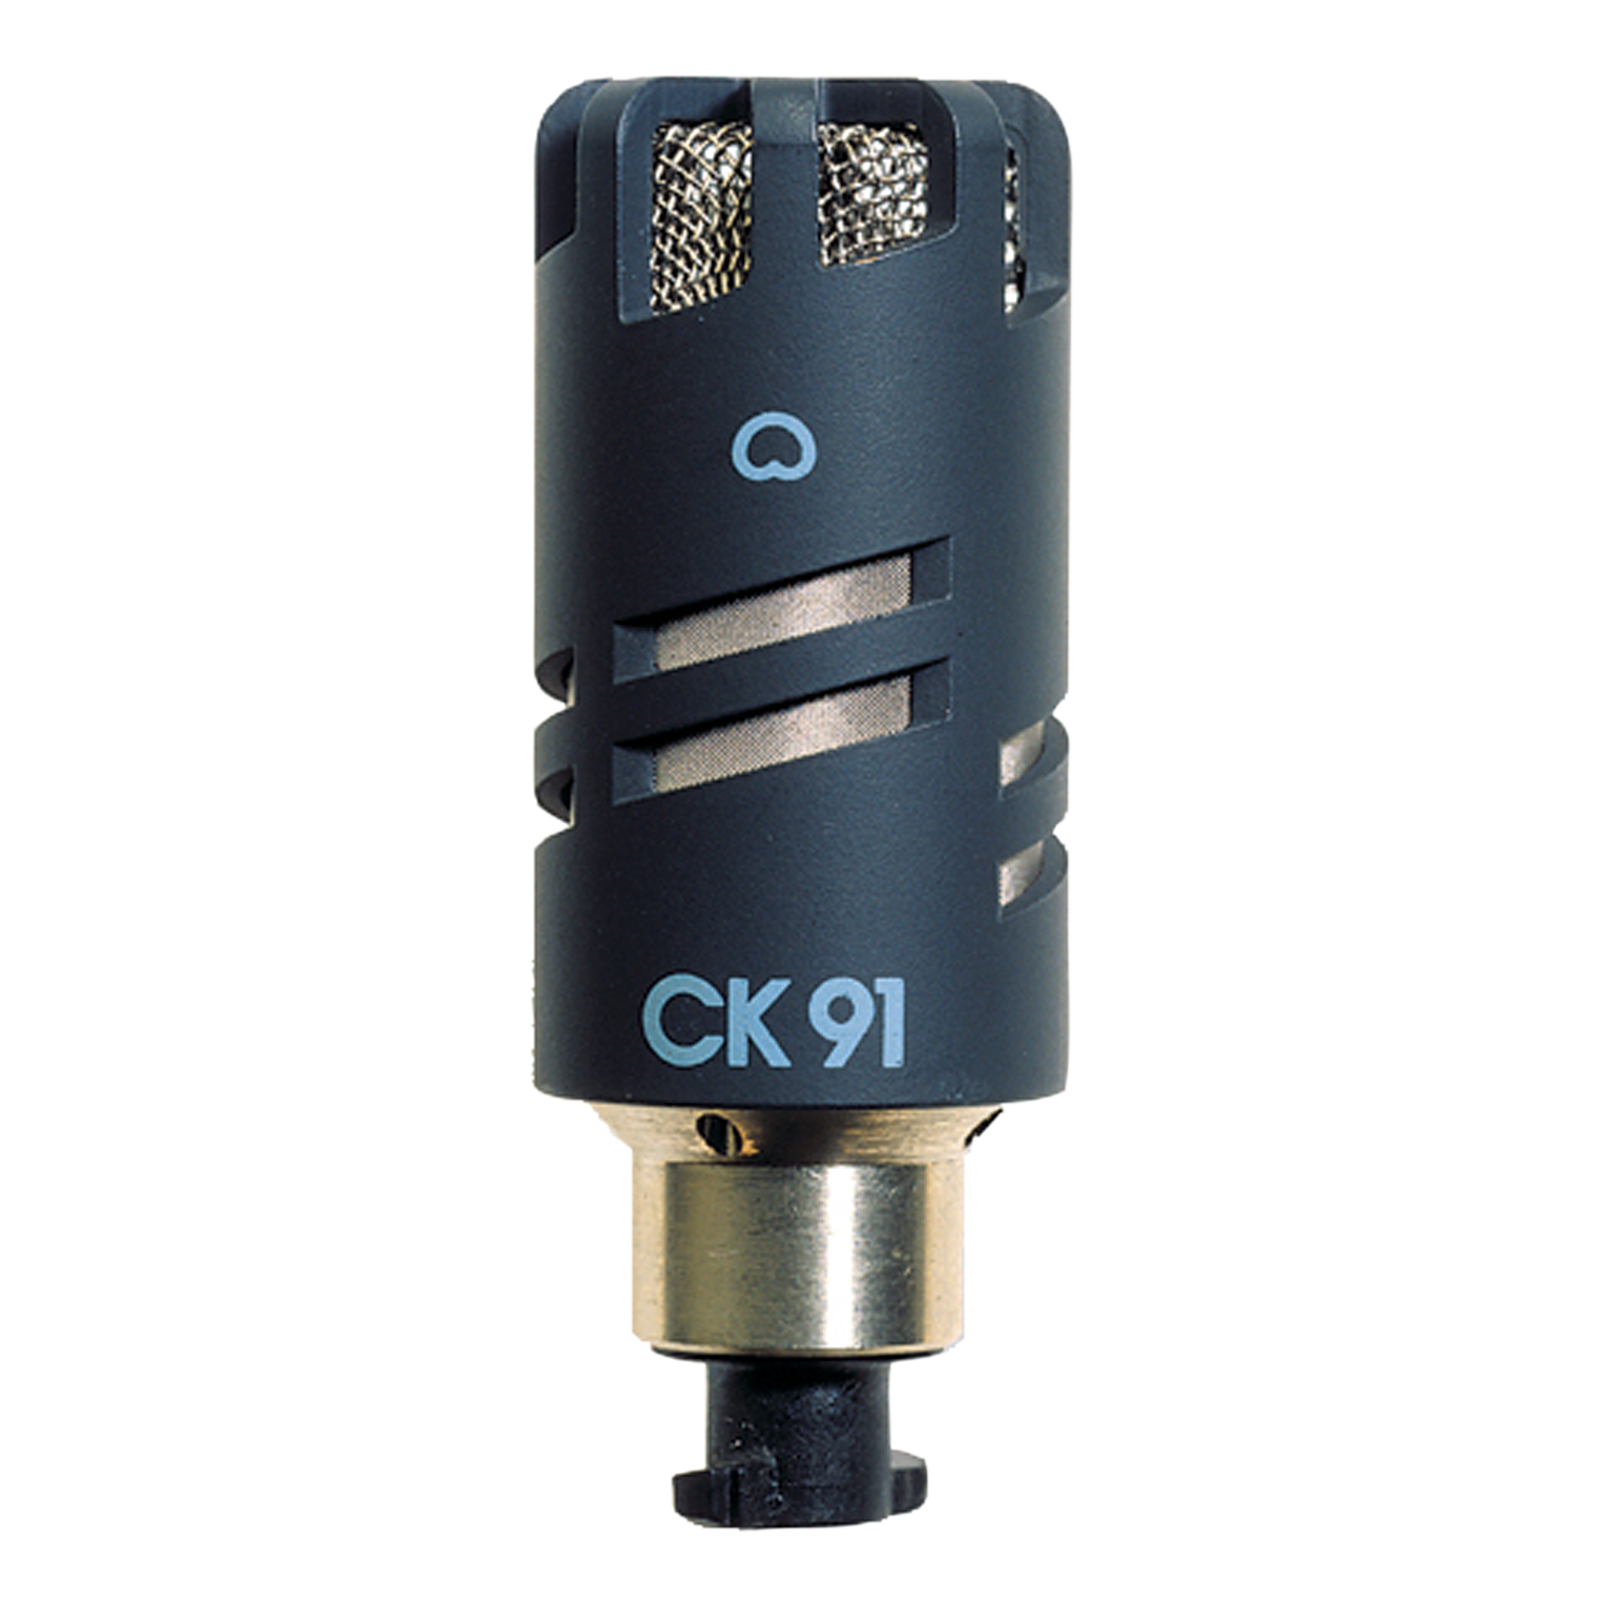 CK91 | High performance cardioid condenser microphone capsule